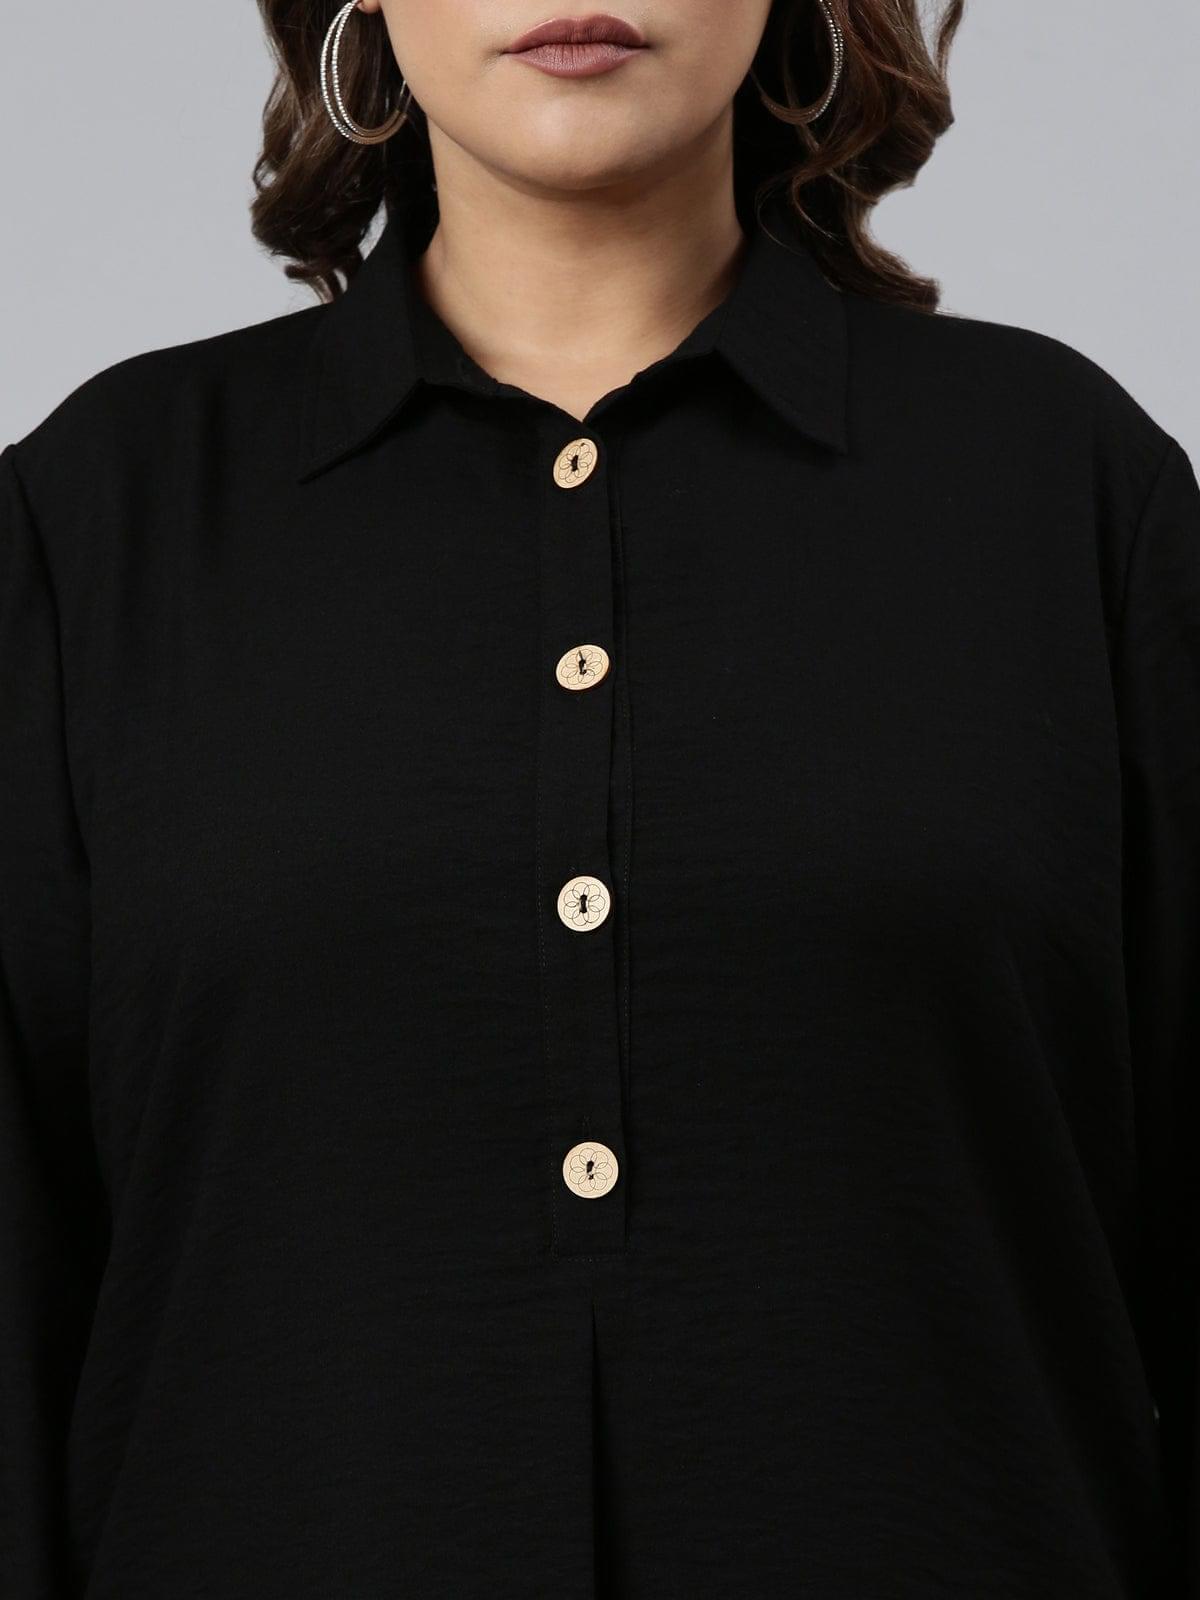 buy black solid  formal shirt dress on online India